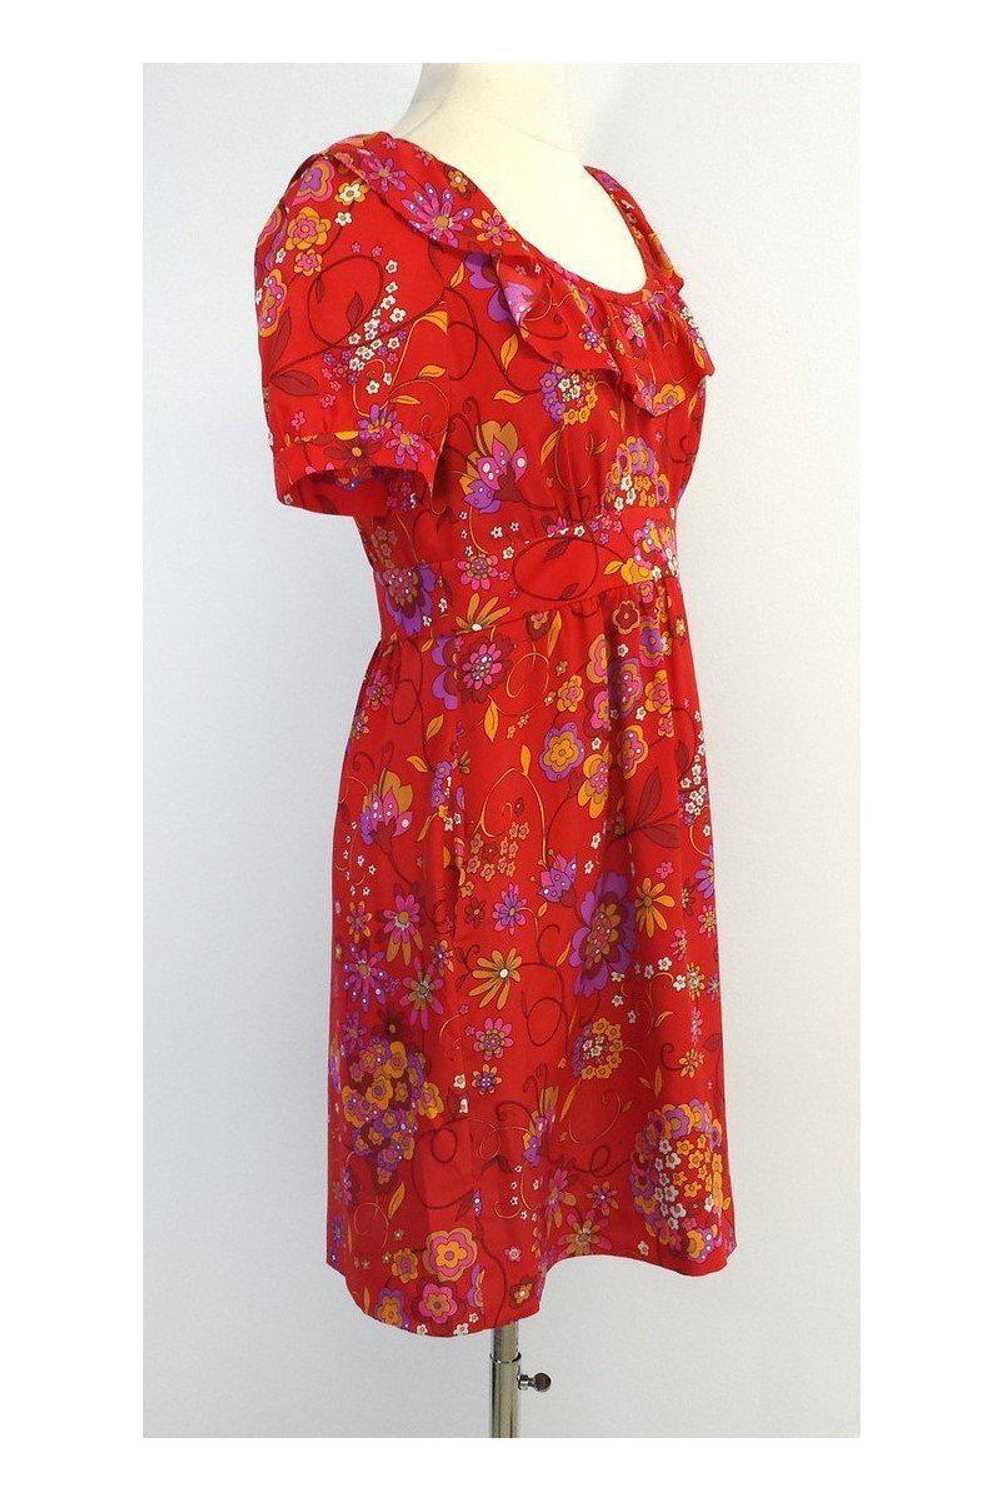 Tibi - Red Floral Print Silk Dress Sz 4 - image 2